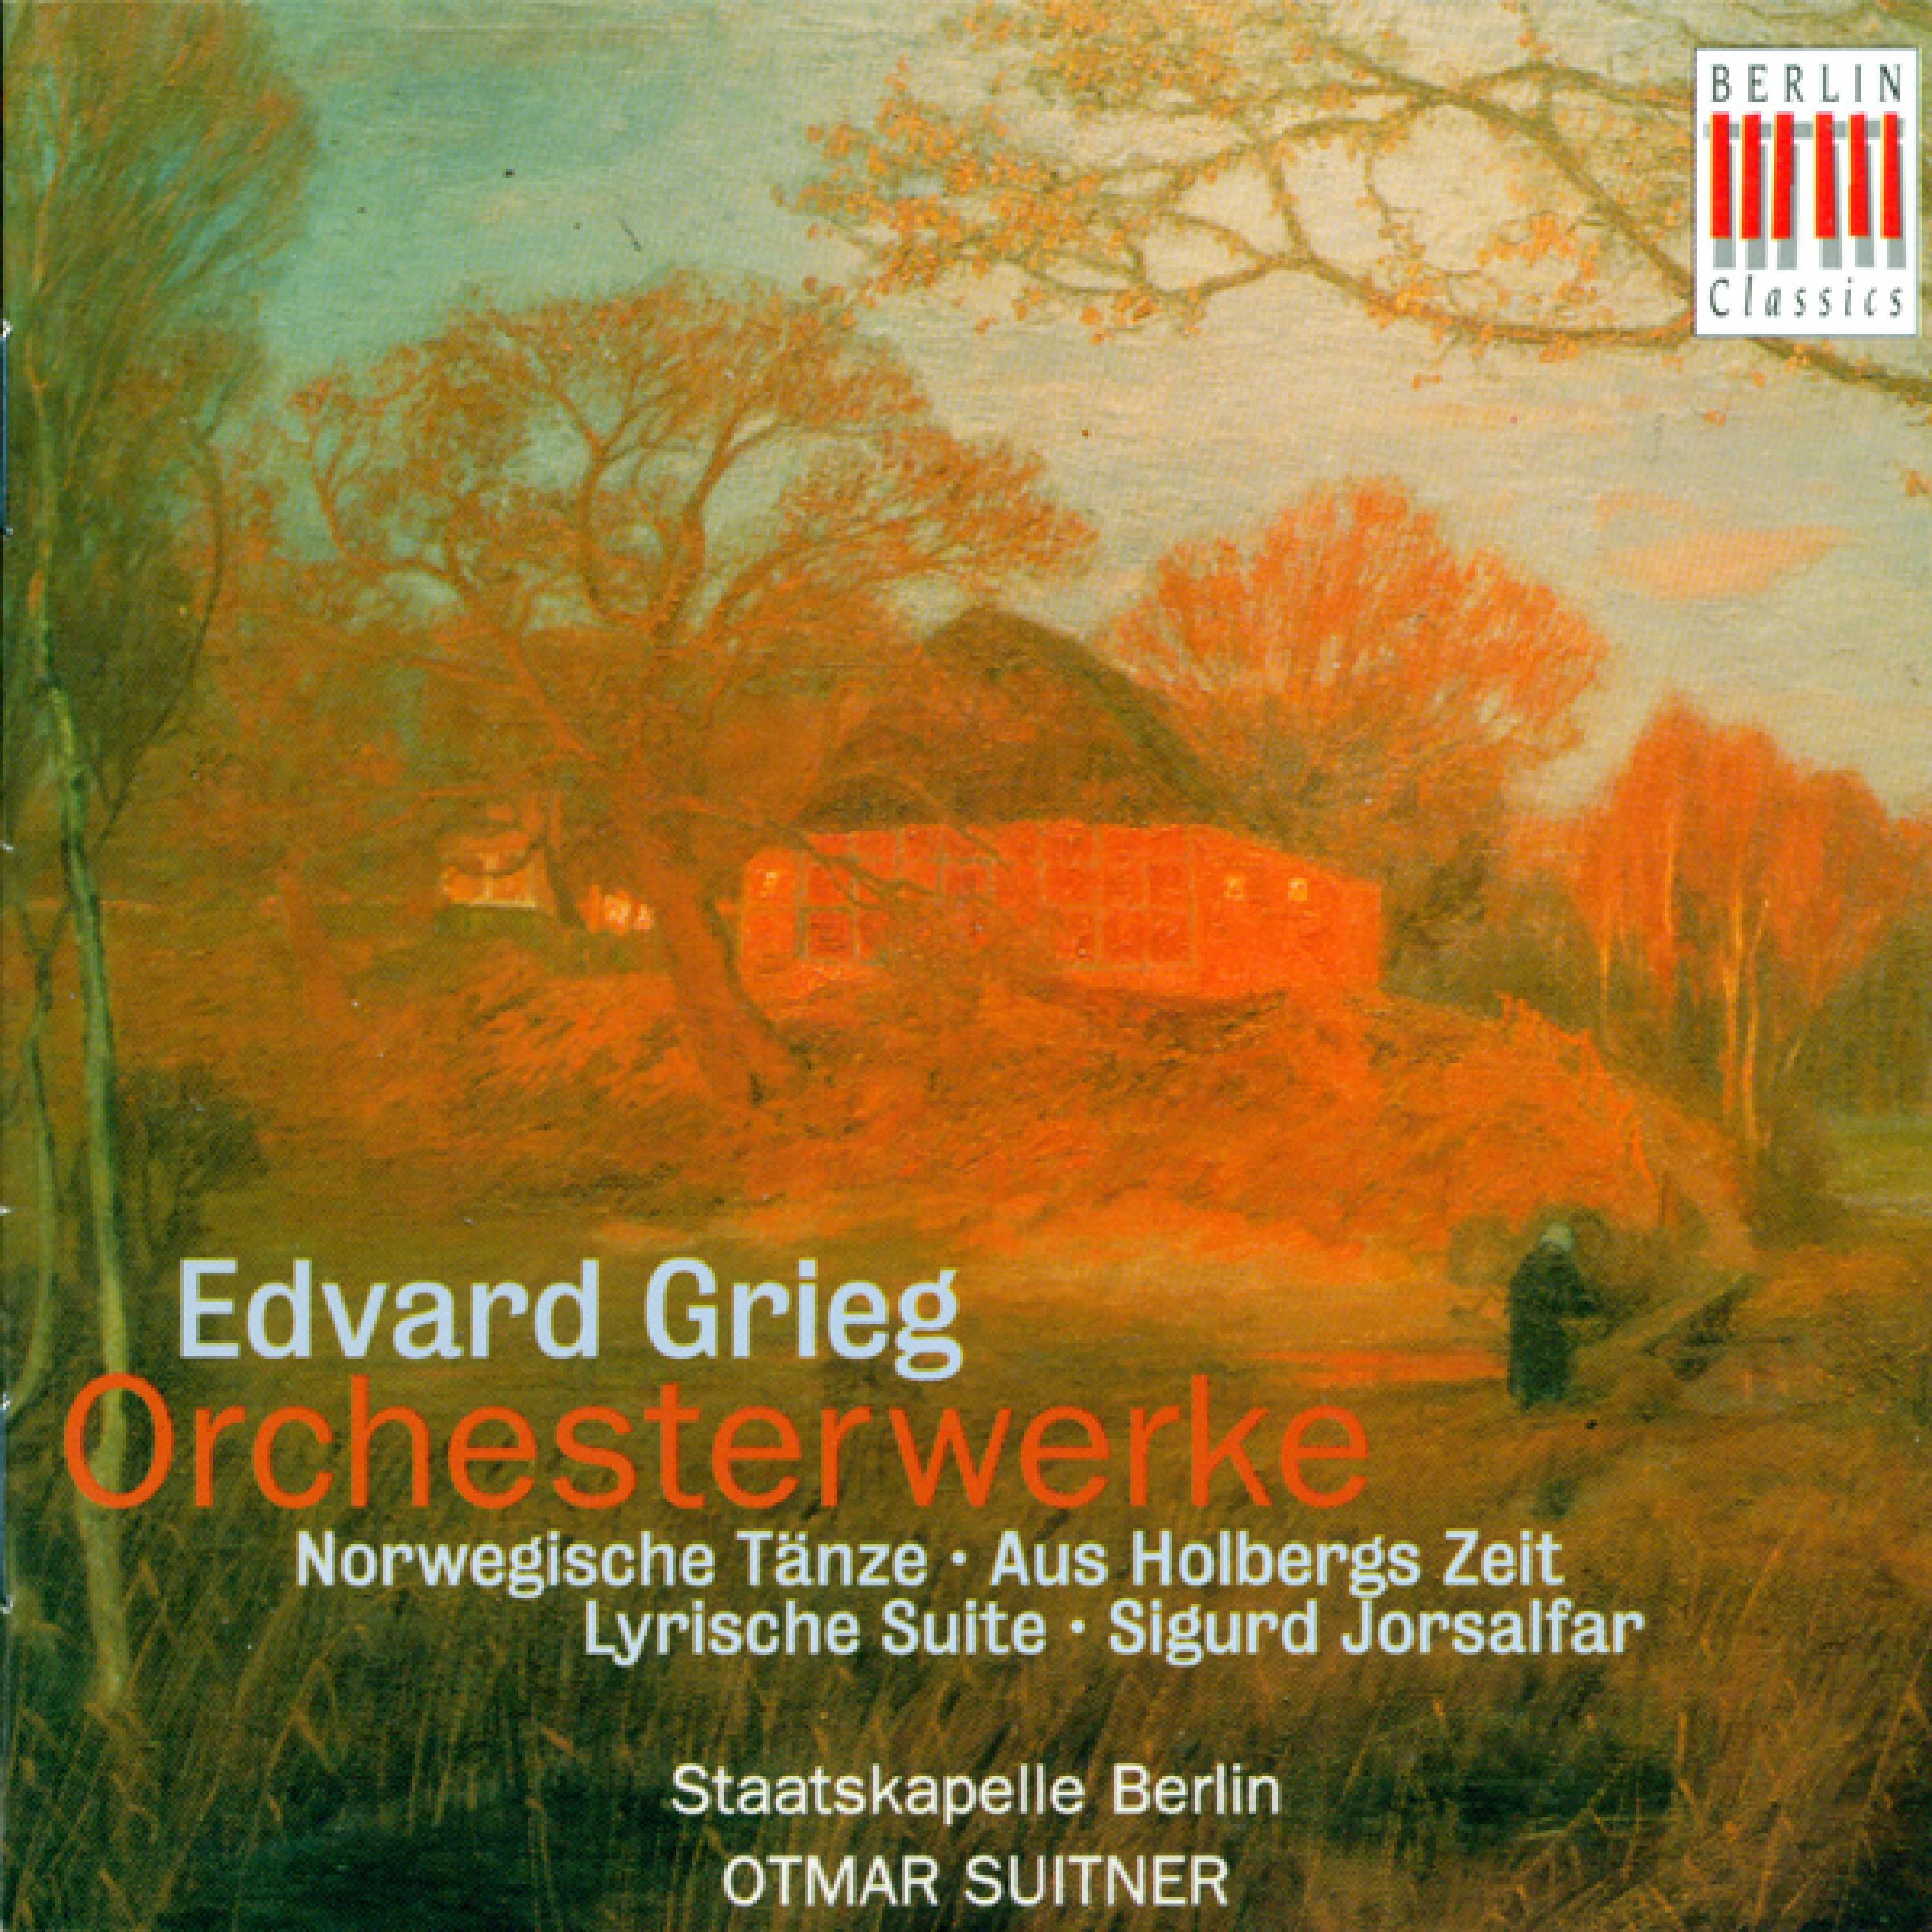 Three Orchestral Pieces from Sigurd Jorsalfar, Op. 56: No. 2, Intermezzo - Borghild's Dream